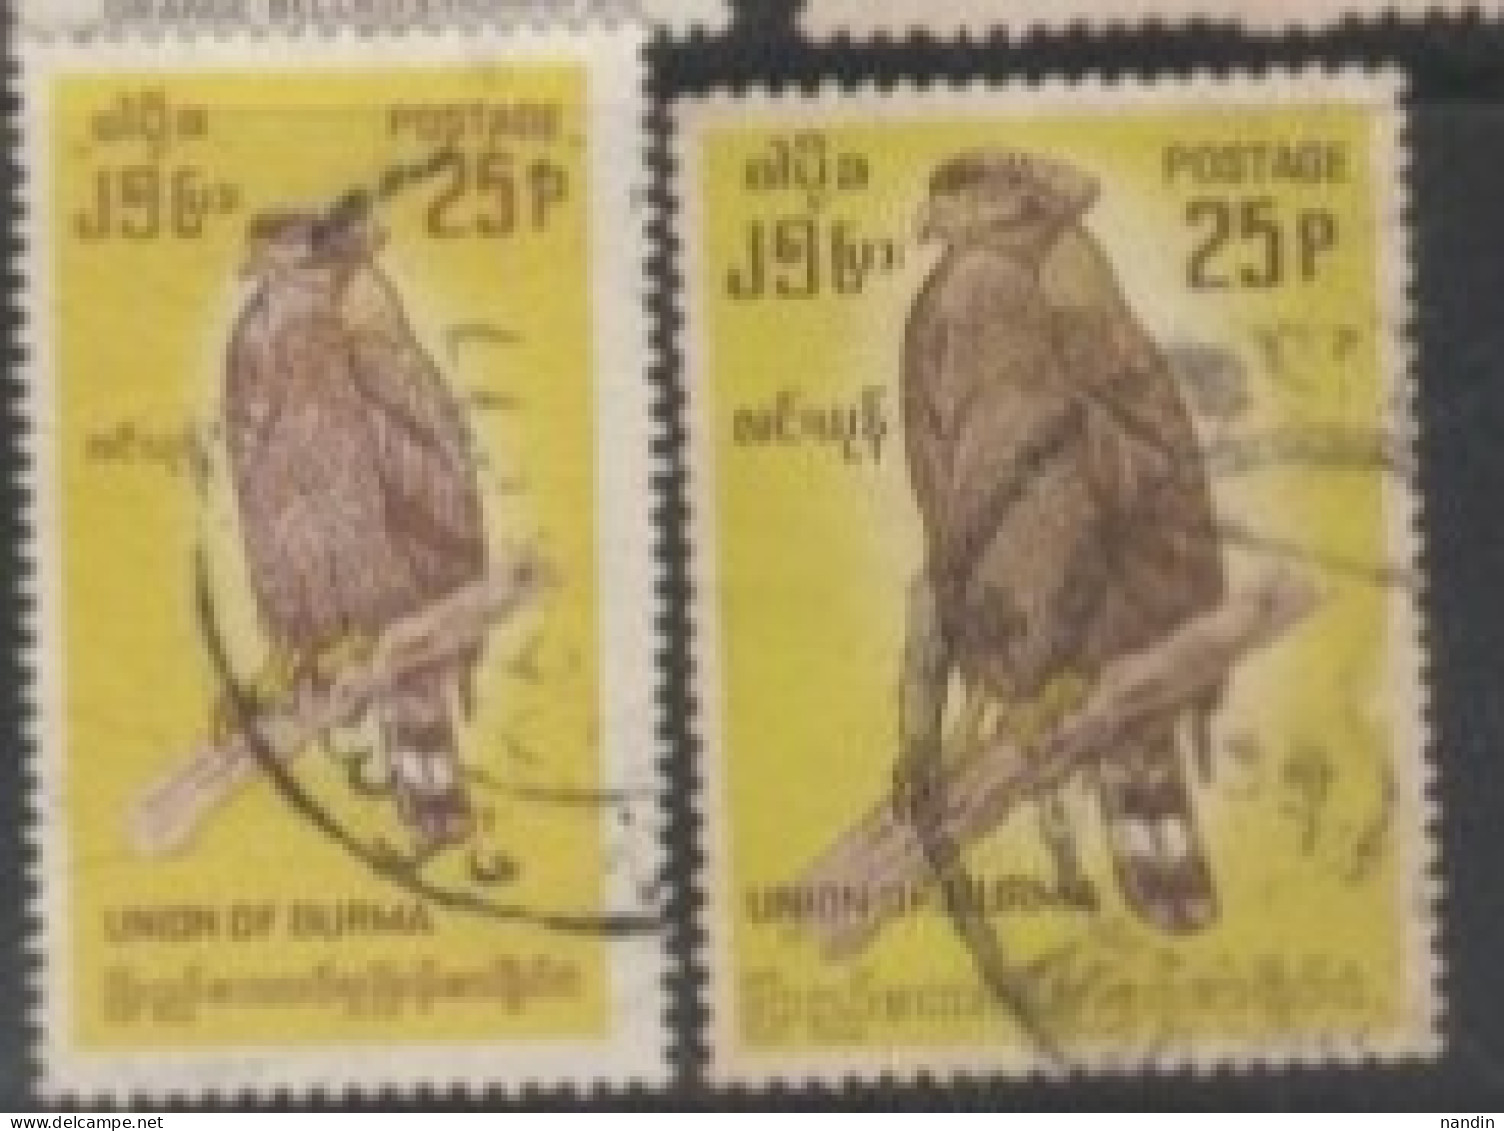 1964-68 BURMA USED STAMP ON BIRD/ Spilornis Cheela Burmanicus-Eagle - Adler & Greifvögel